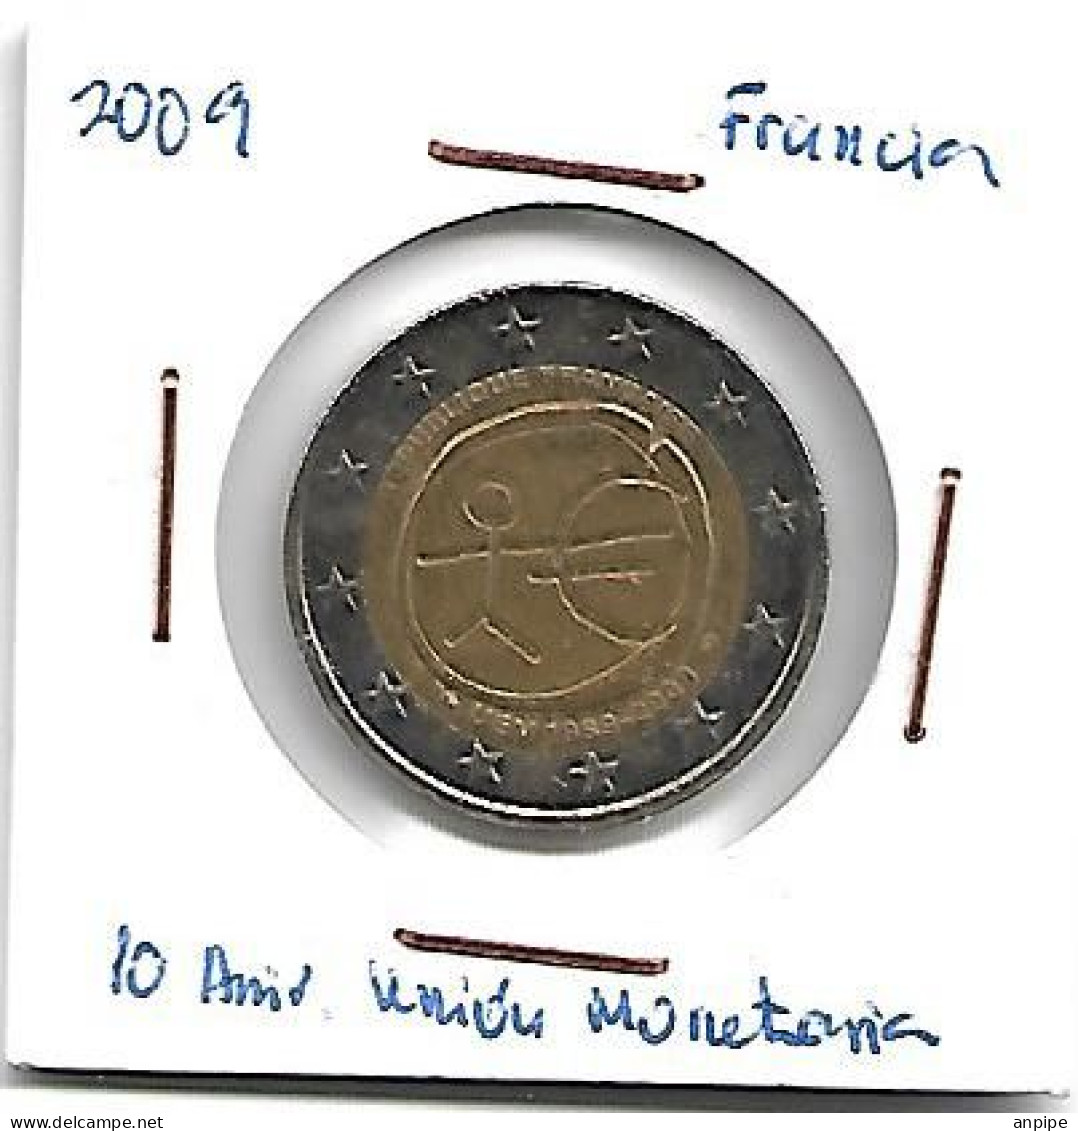 FRANCIA 2 €. CONMEMORATIVO - Francia